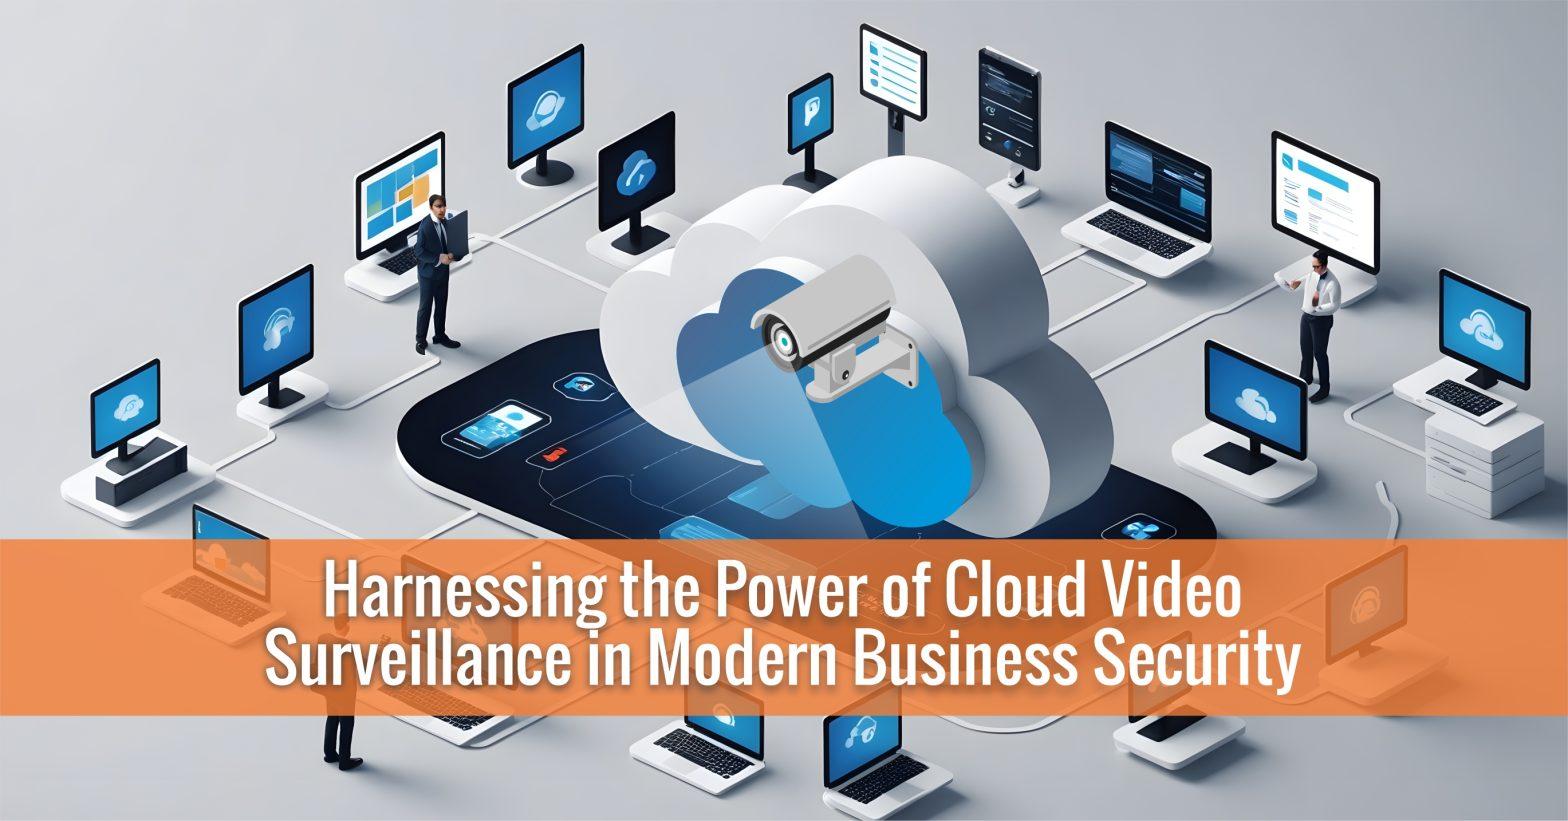 Cloud Video Surveillance in Modern Business Security